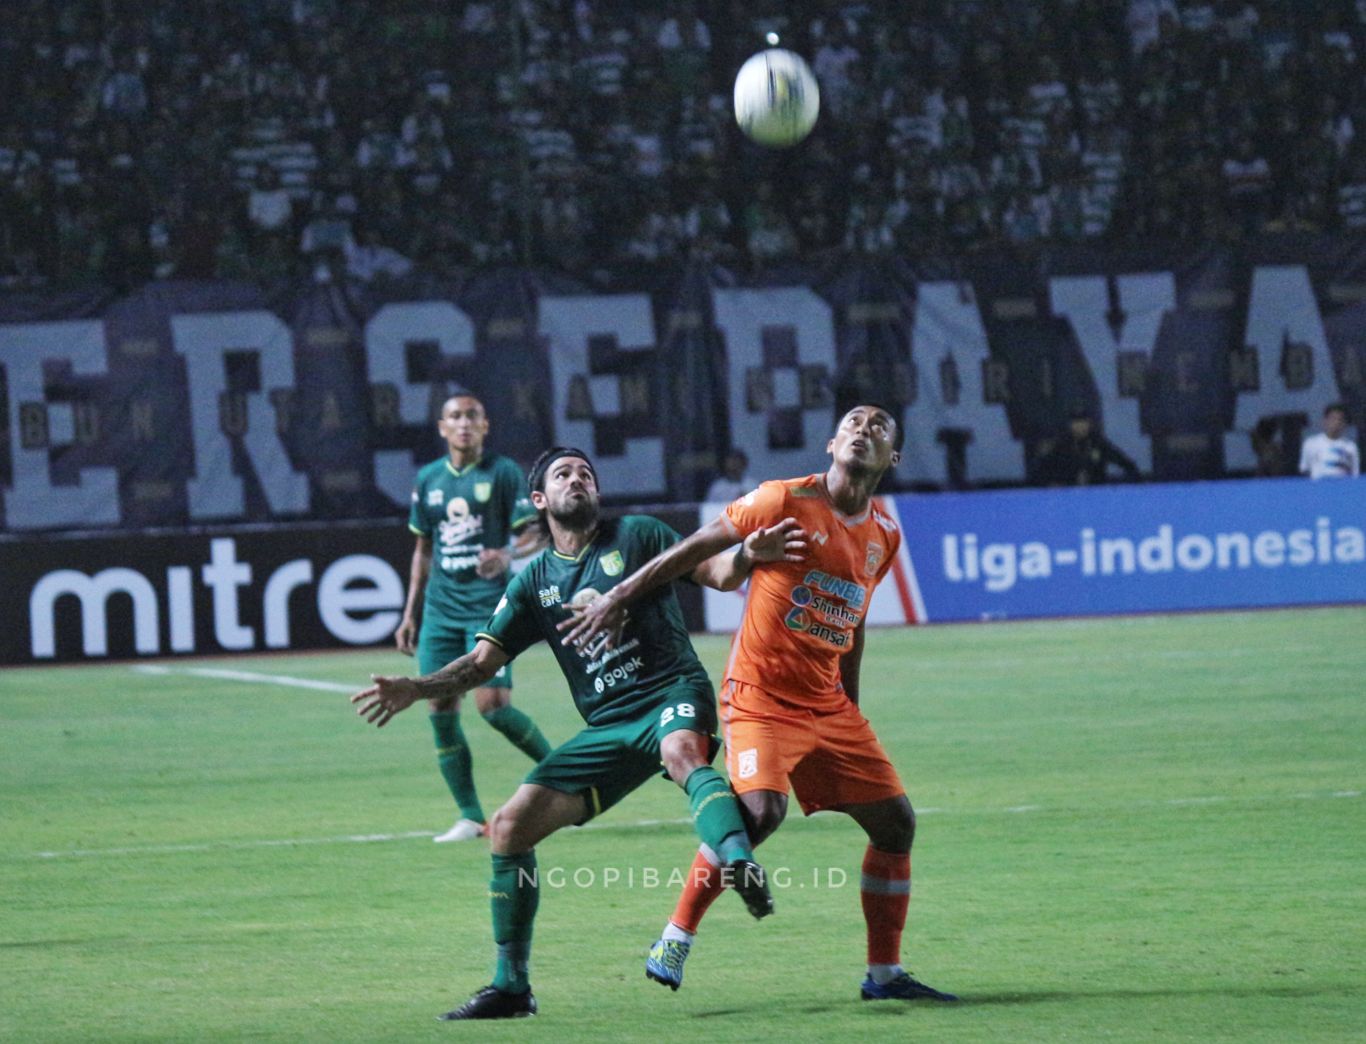 Persebaya vs Borneo FC di Stadion Gelora Bung Tomo, Jumat 11 Oktober 2019. (Foto: Haris/ngopibareng.id)